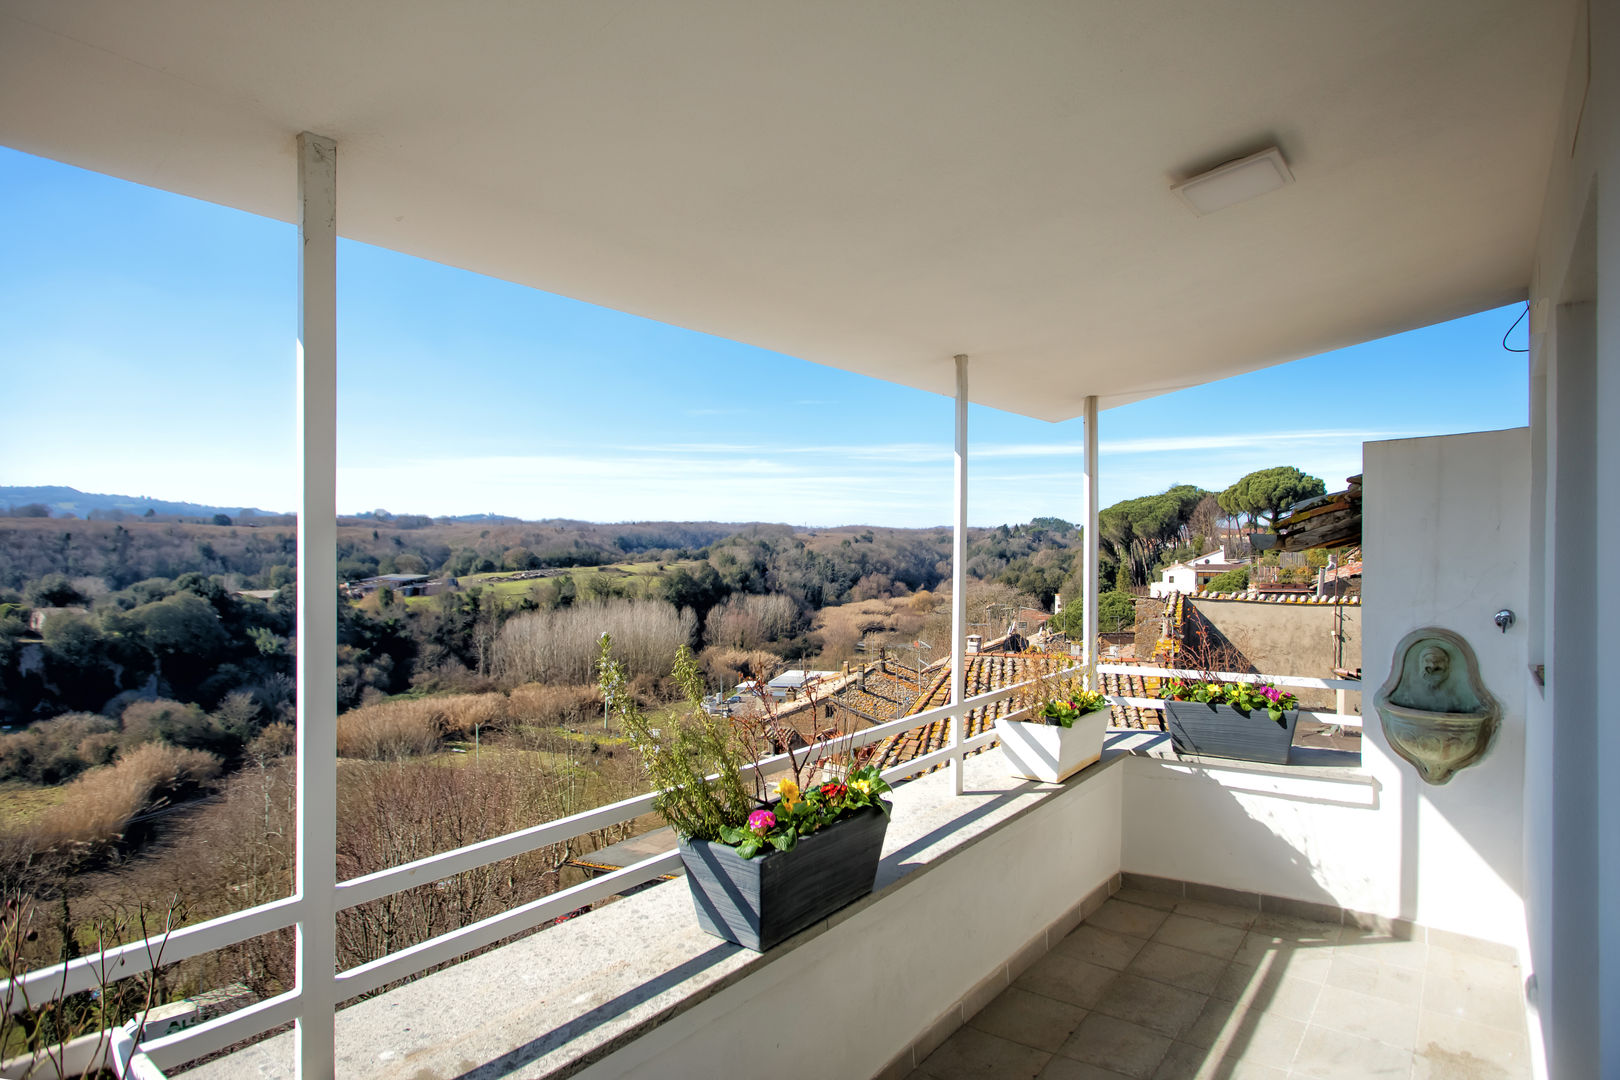 Casa-Cannocchiale, MAMESTUDIO MAMESTUDIO Minimalistische balkons, veranda's en terrassen